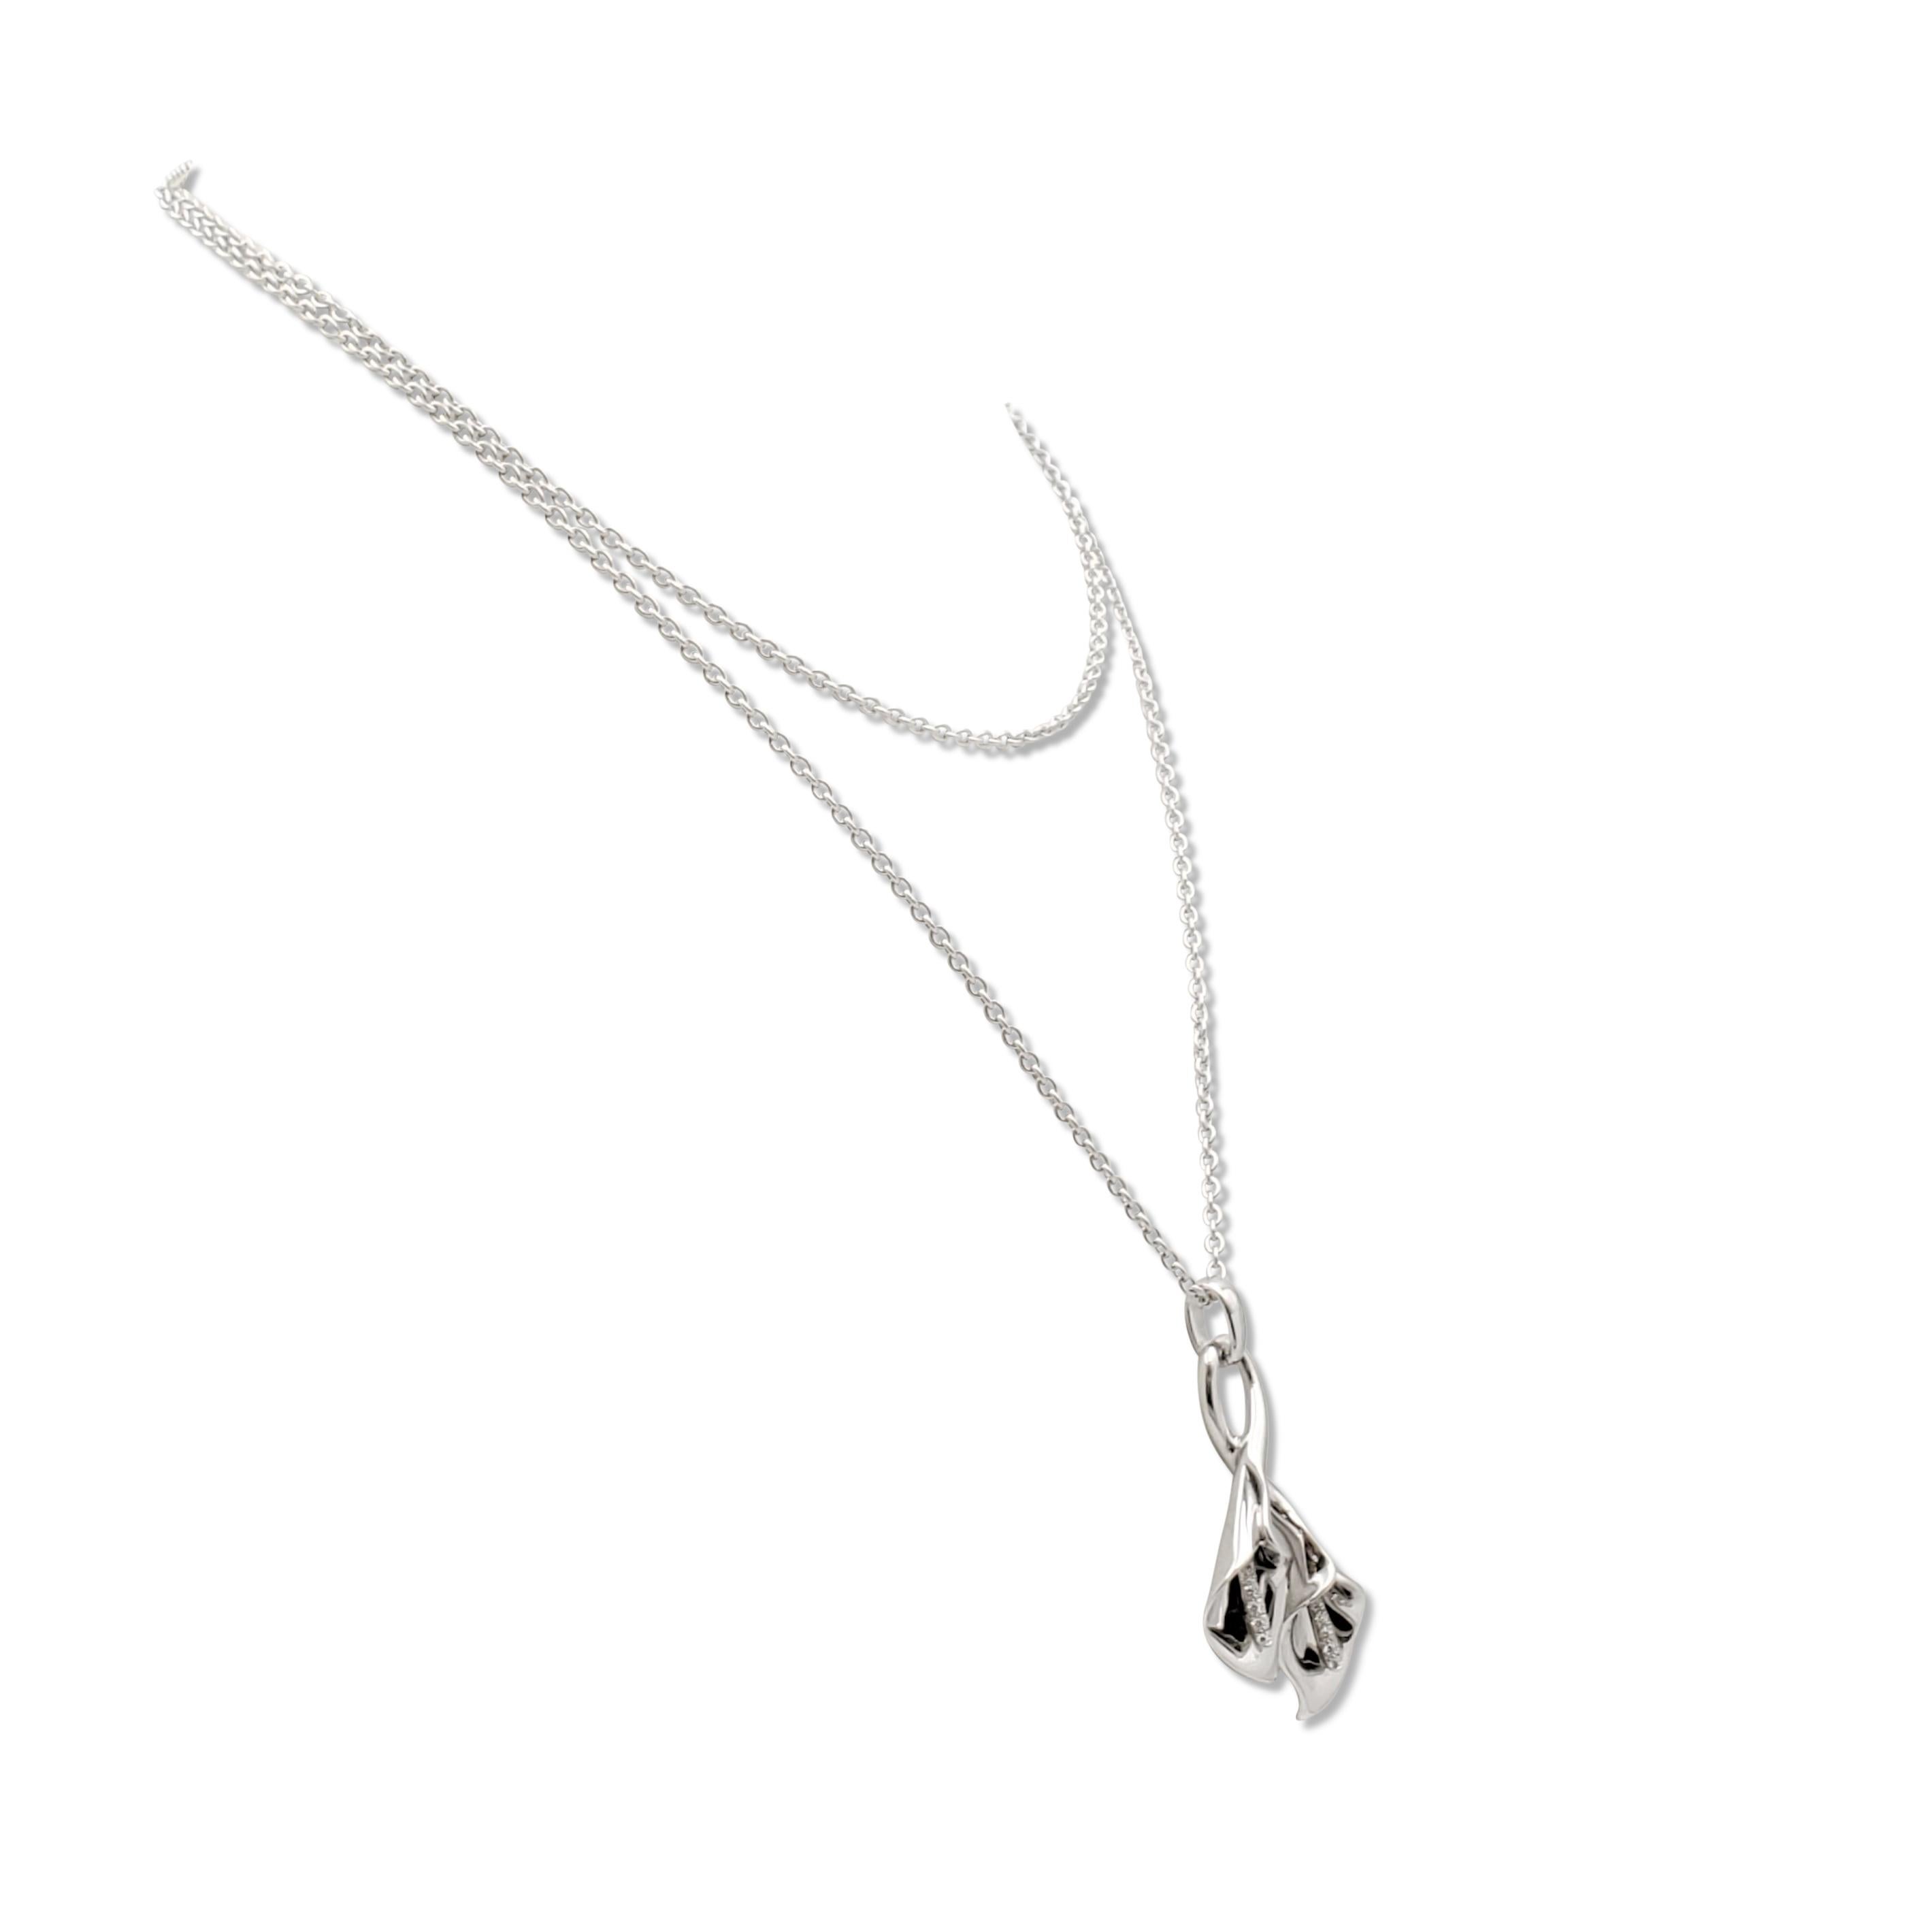 Round Cut Asprey 'Lily' White Gold and Diamond Pendant Necklace